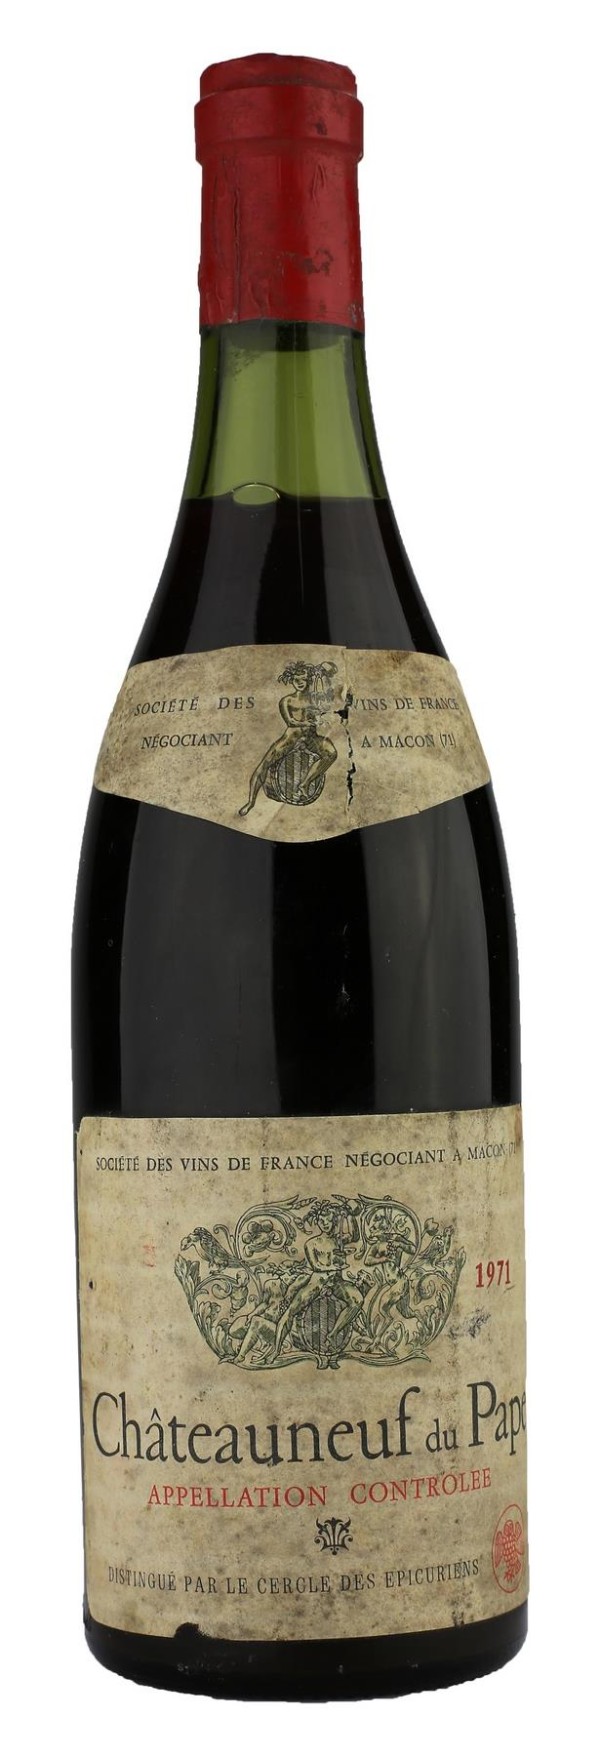 Chateauneuf du pape-CHATEAUNEUF DU PAPE - Französische Weinfirma 1971